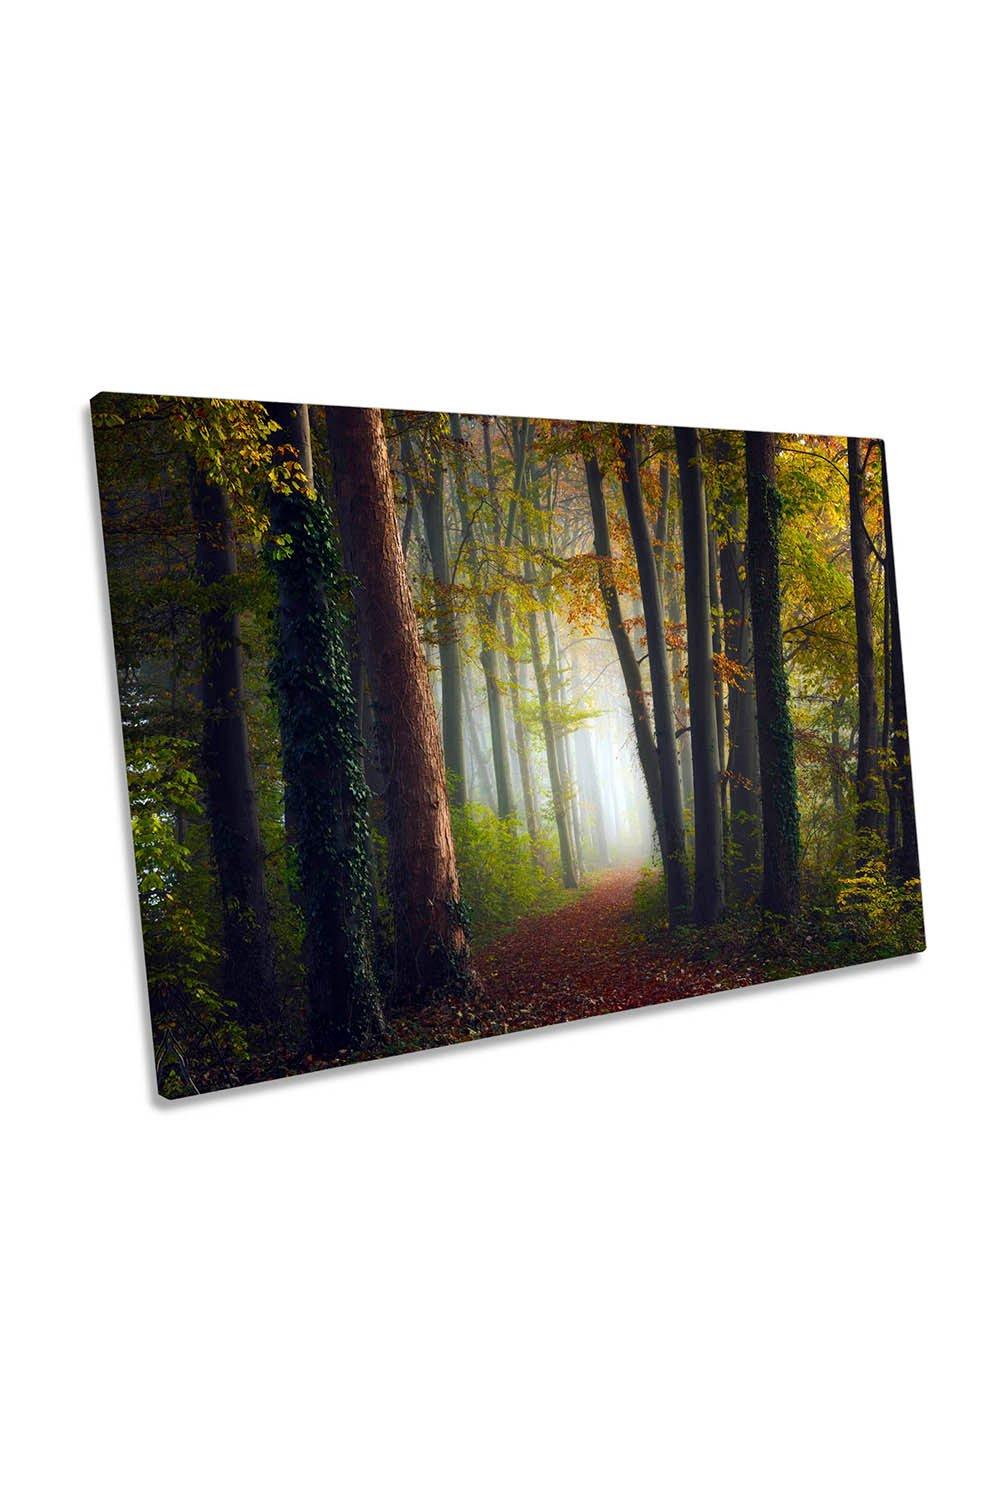 Autumn Colourful Forest Landscape Canvas Wall Art Picture Print